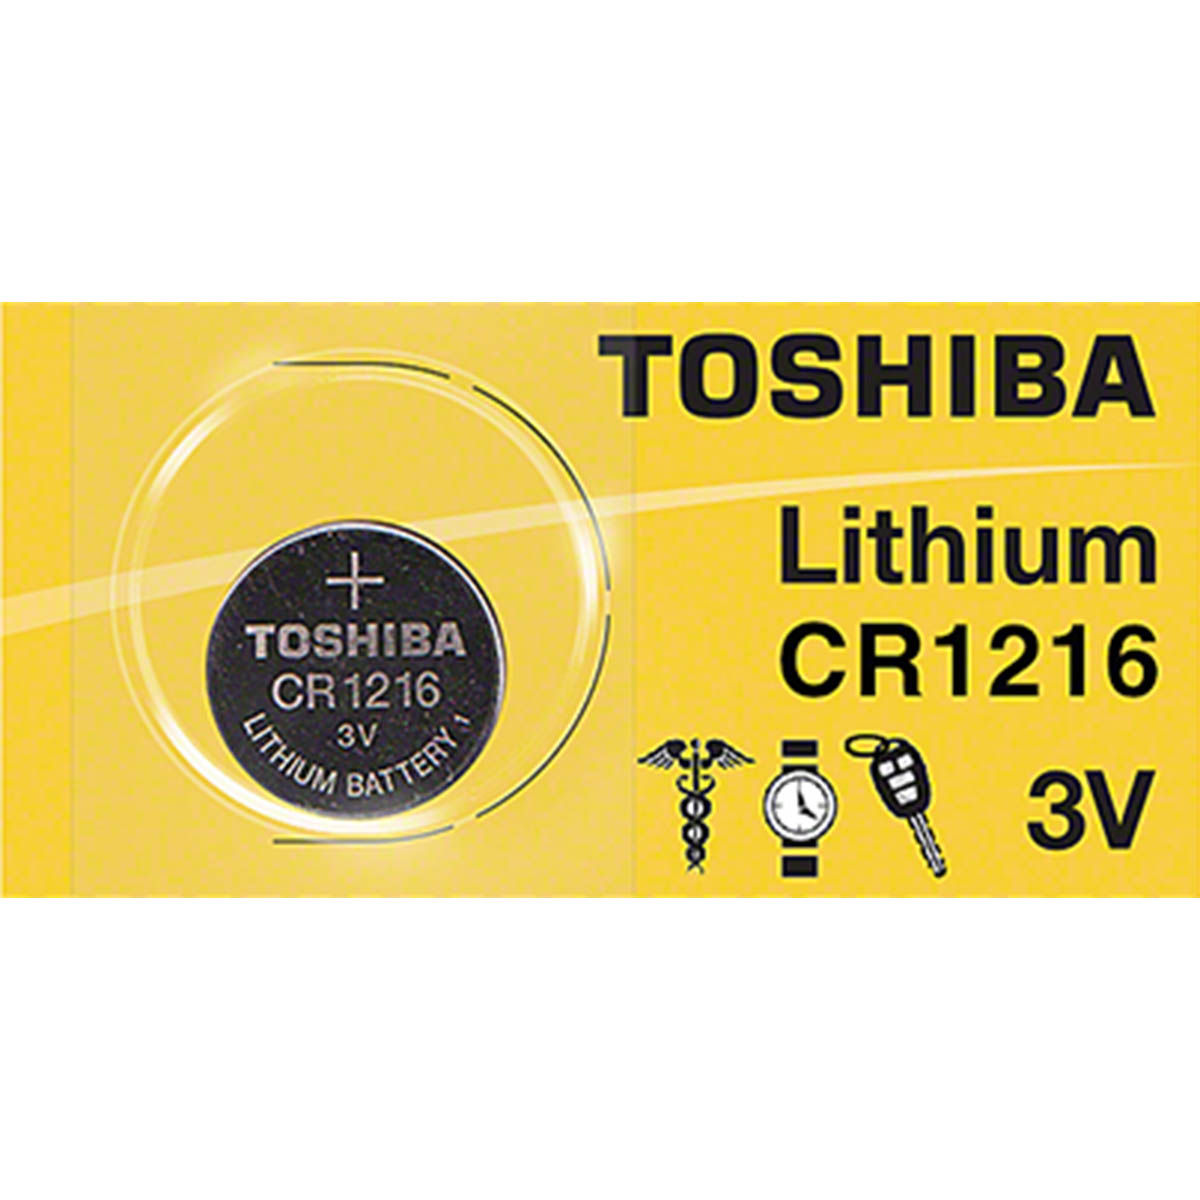 Toshiba CR1216 Lithium Coin Cell Battery 3v, Tear Strip 1pc